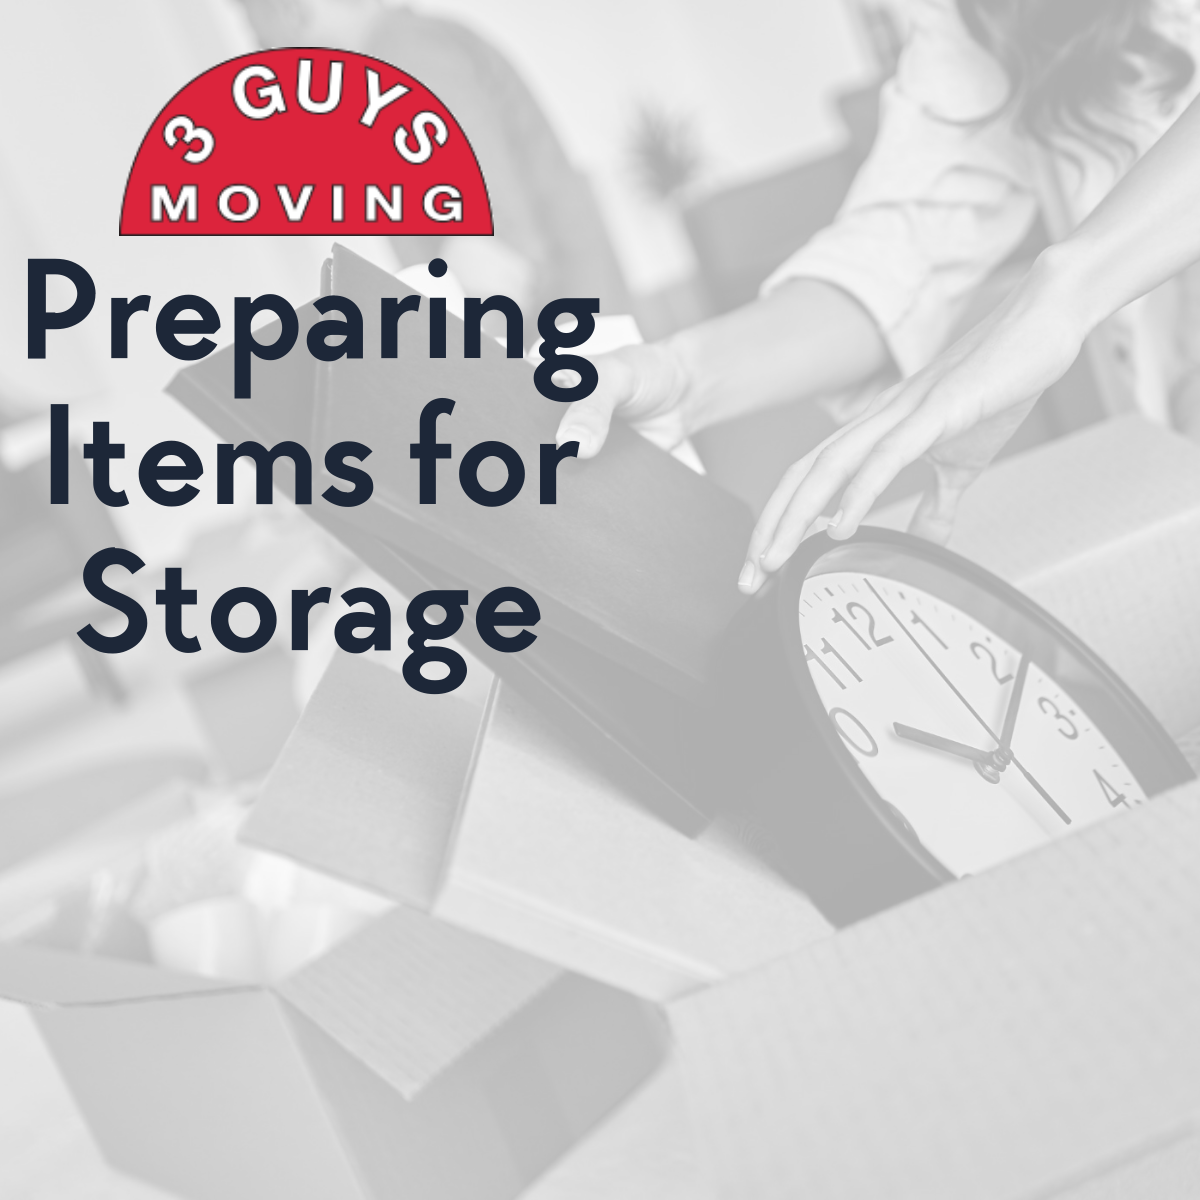 Preparing Items for Storage - Preparing Items for Storage